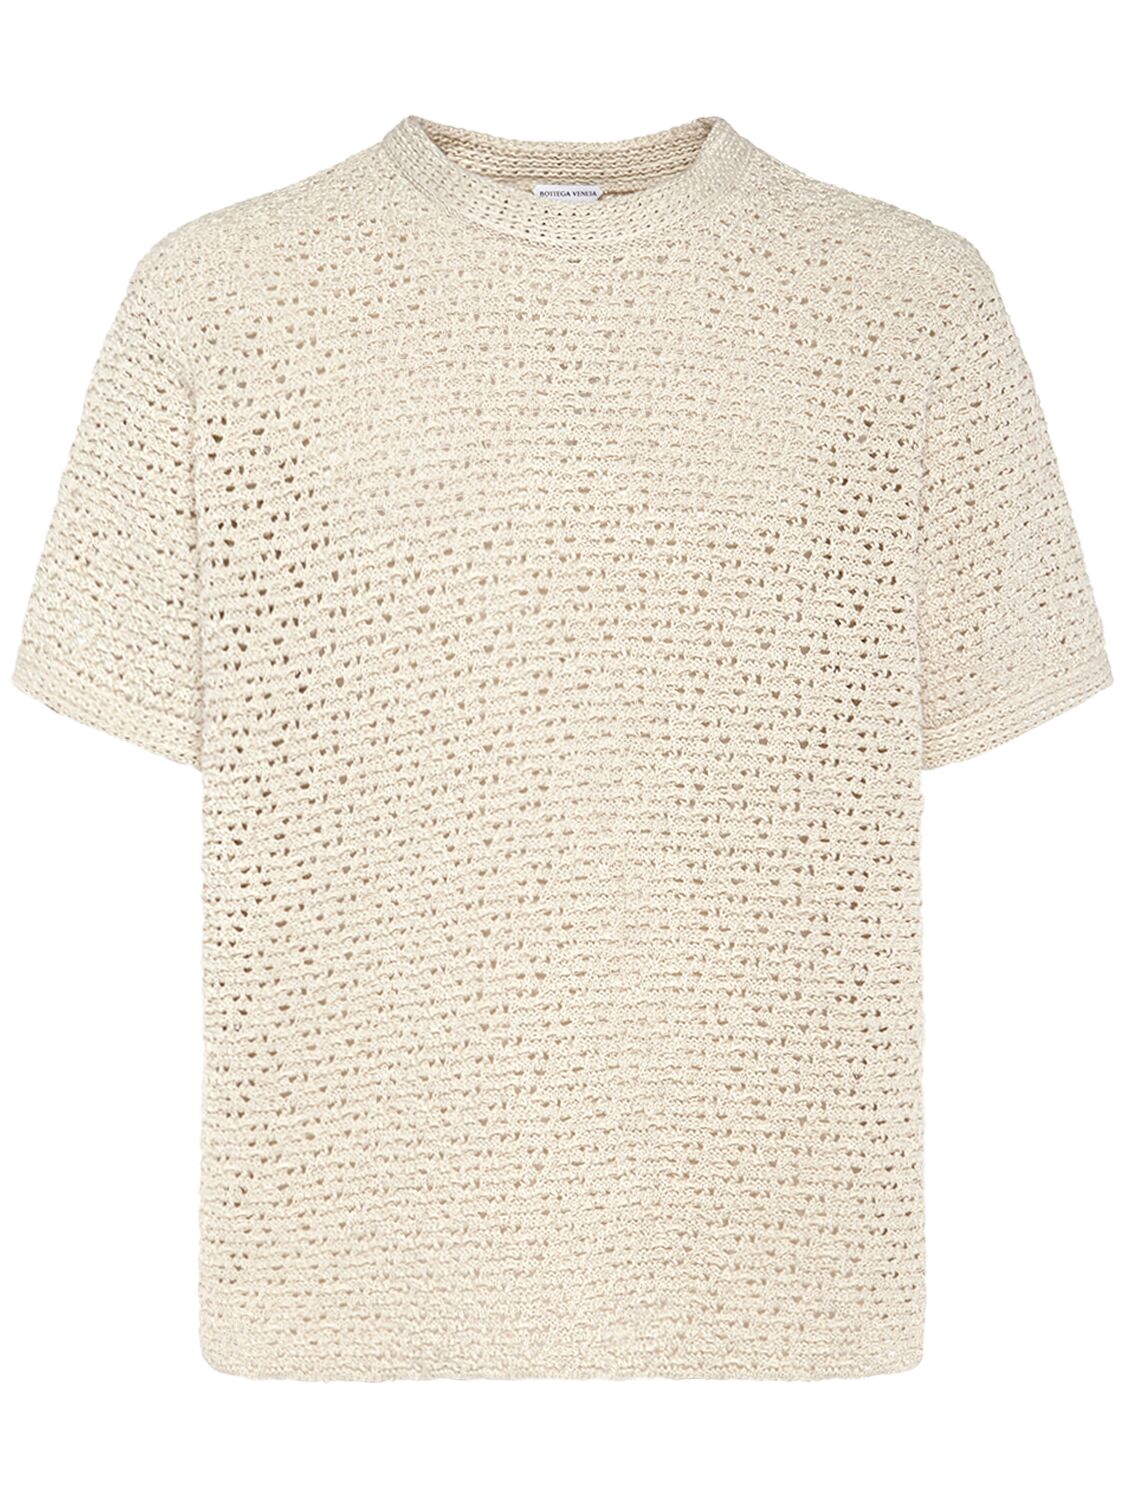 Image of Cotton Crochet T-shirt